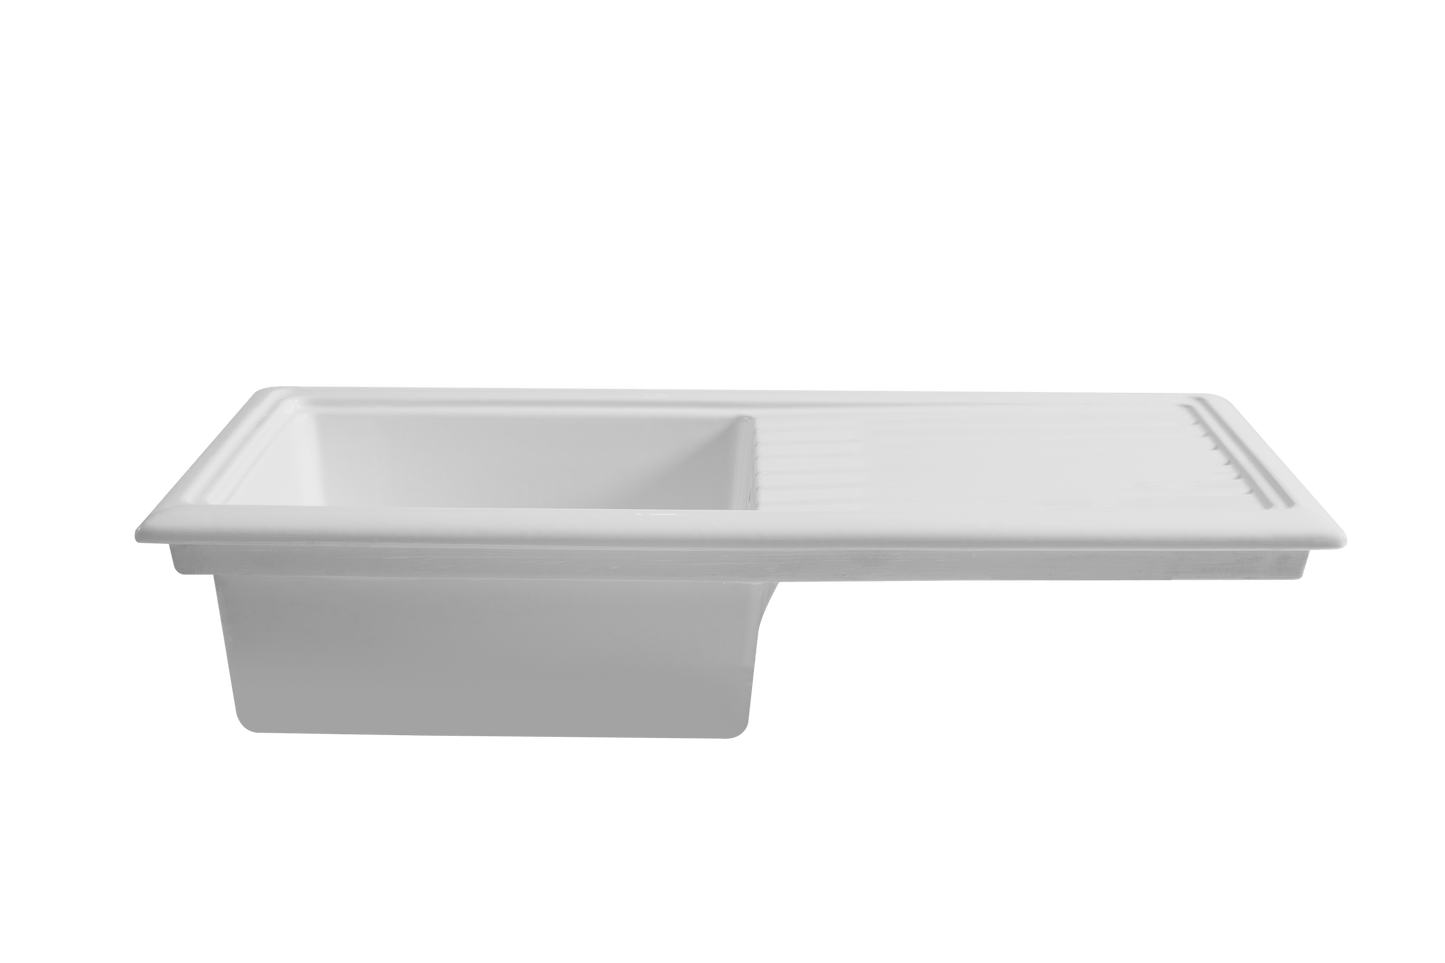 ceramic kitchen sink without drainer